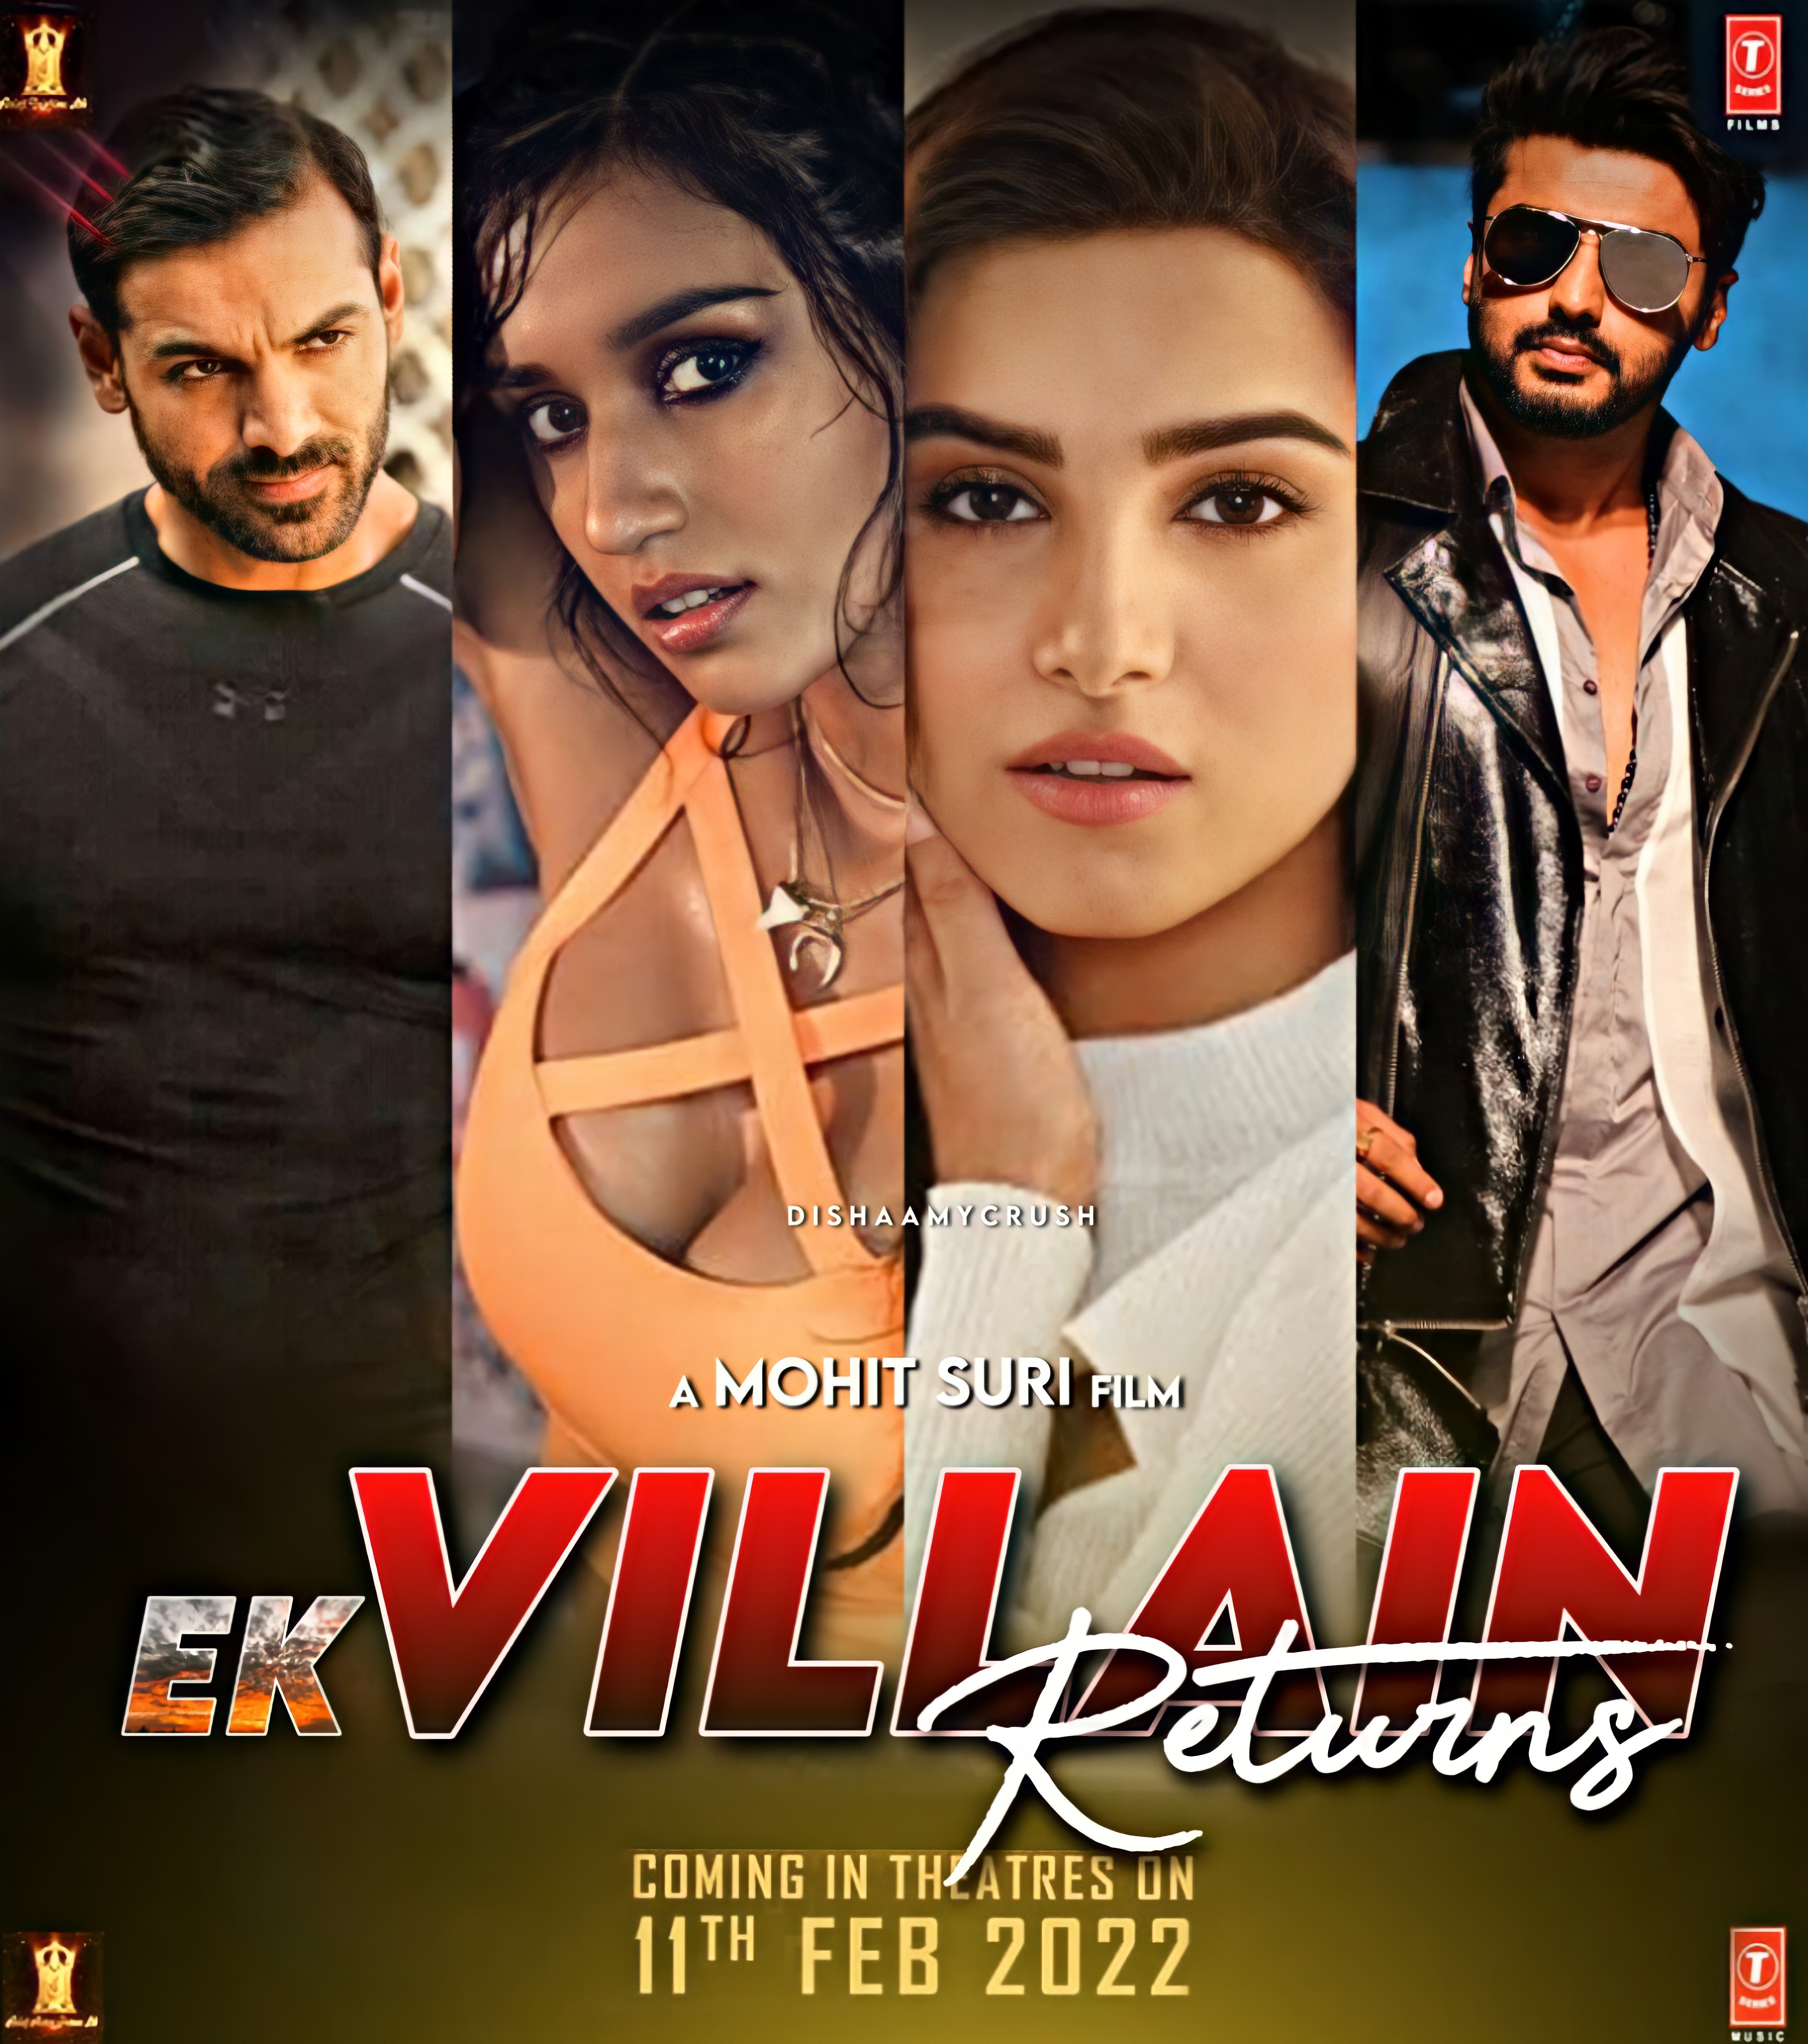 Ek Villain Returns (2022) 1080p HDRip Hindi Movie Official Trailer [80MB]